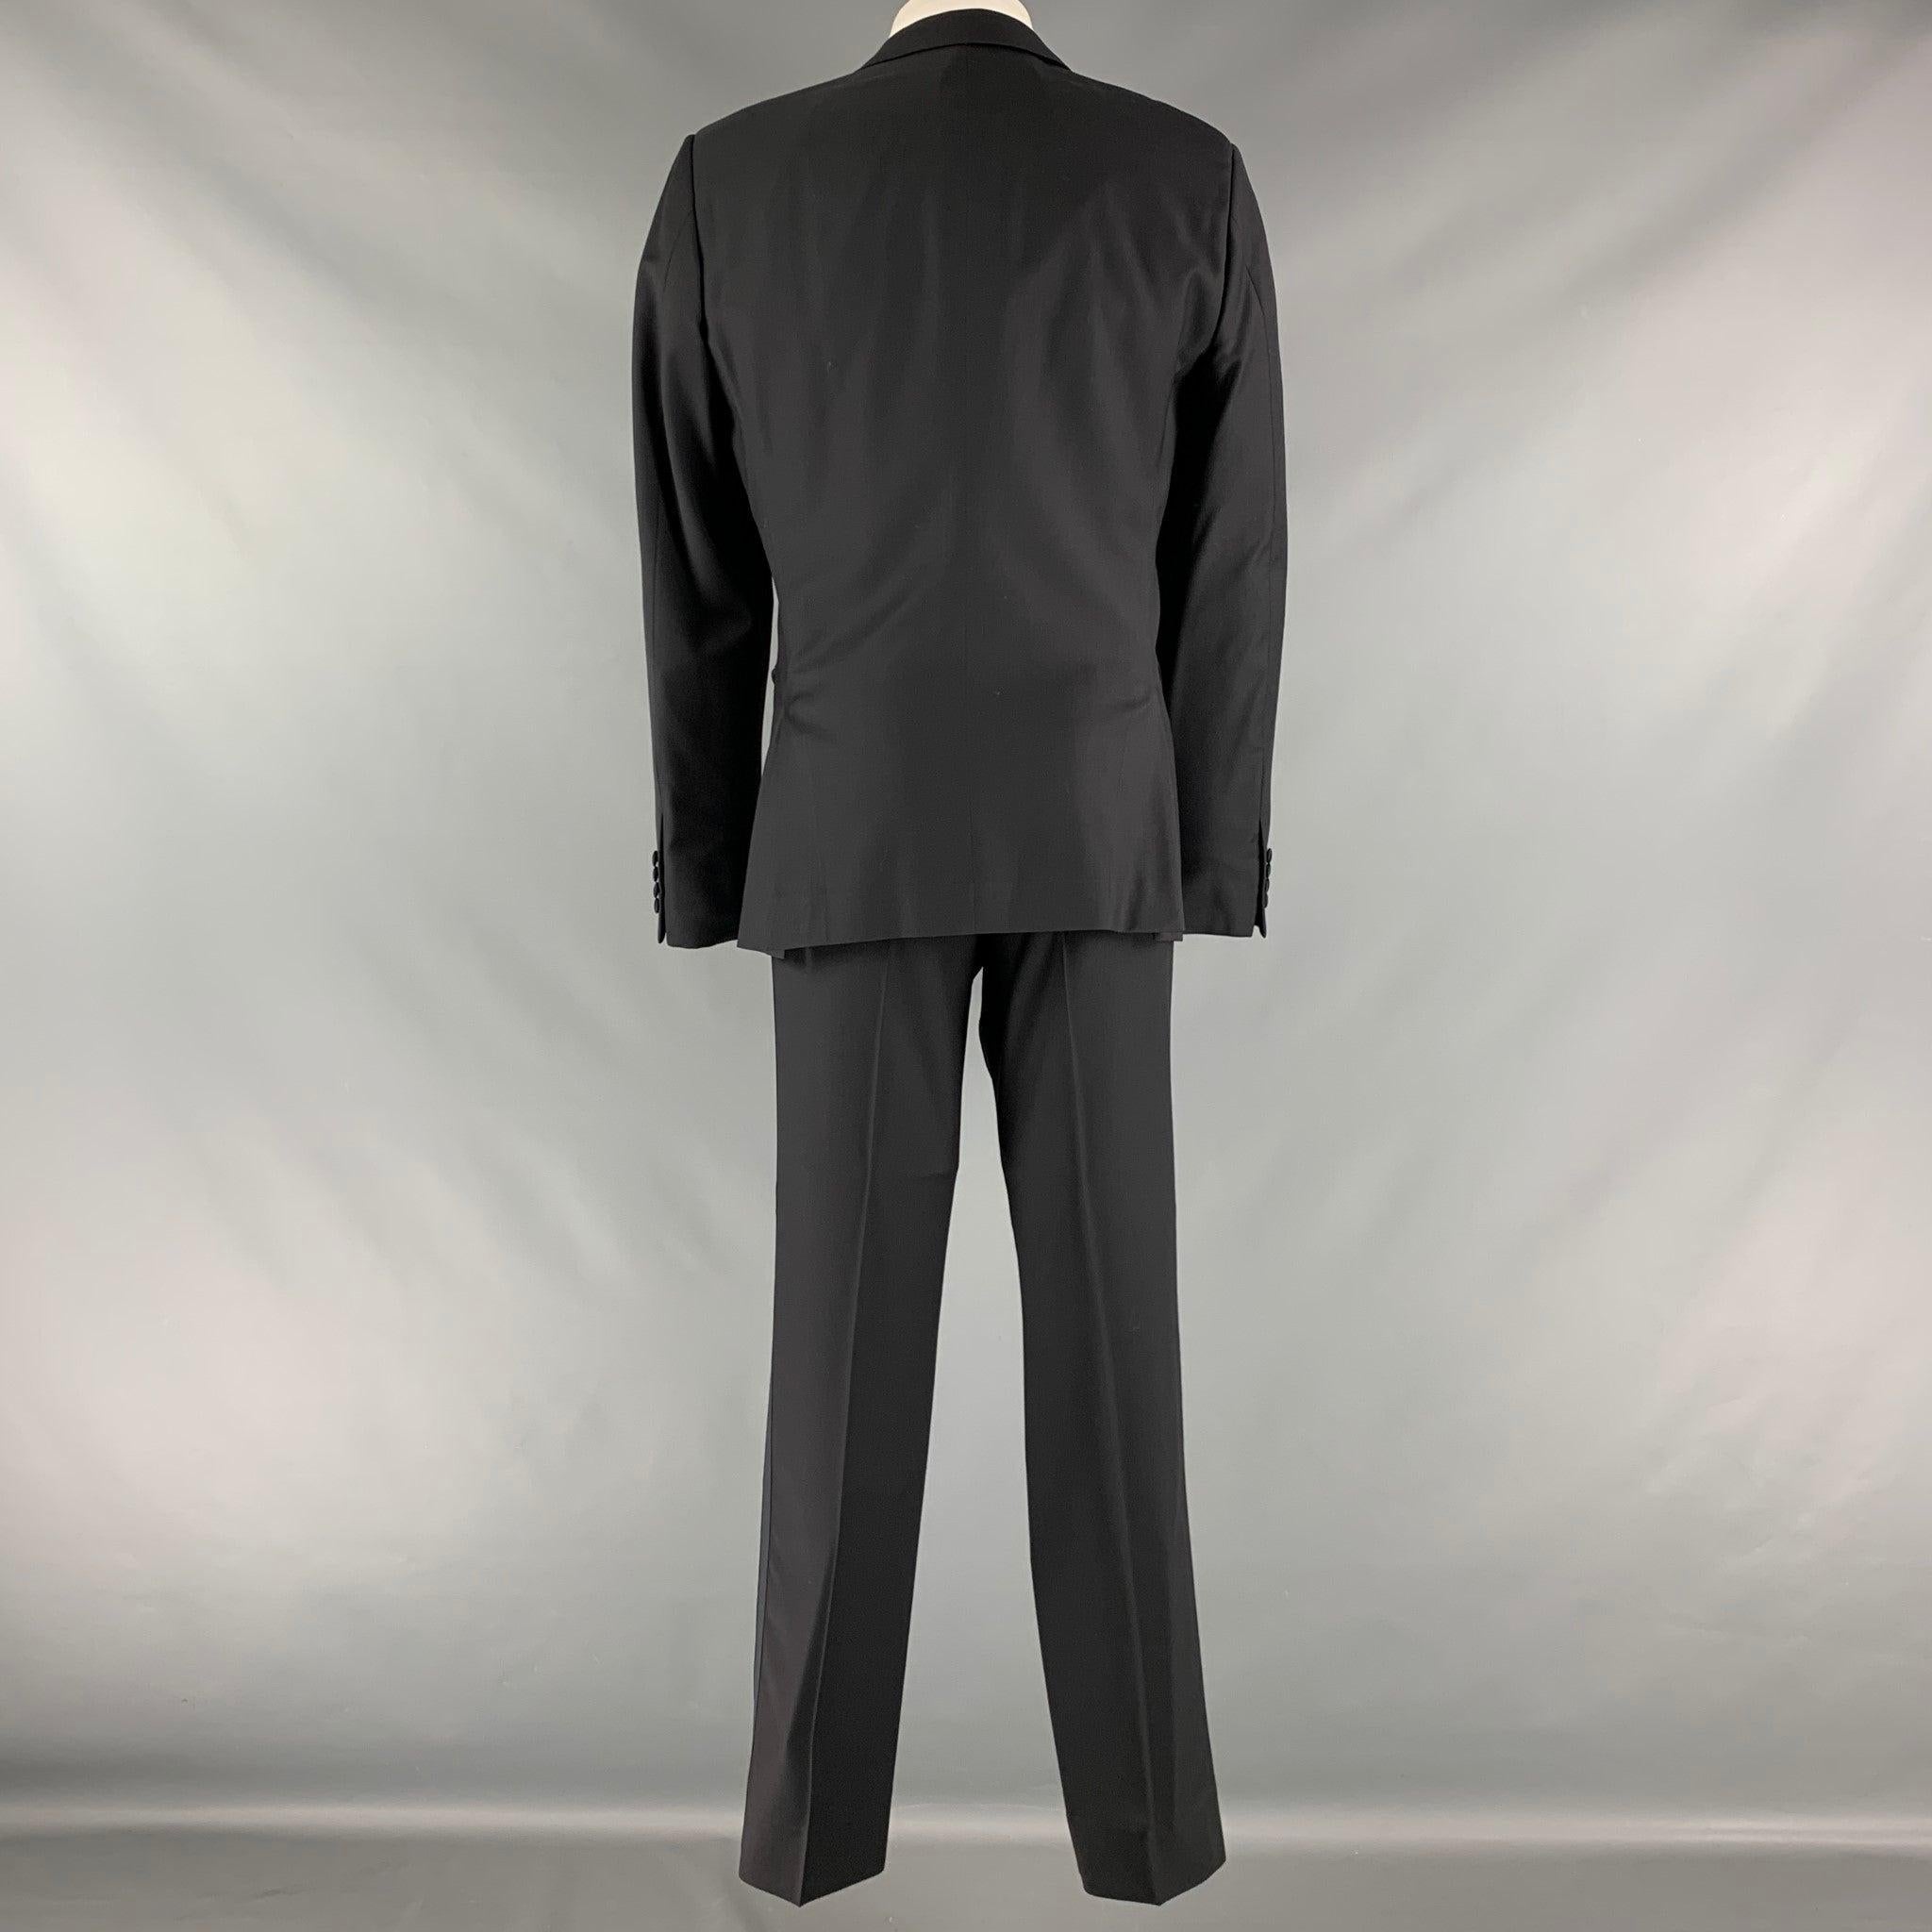 CALVIN KLEIN COLLECTION Size 38 Black Solid Wool Peak Lapel Tuxedo For Sale 1